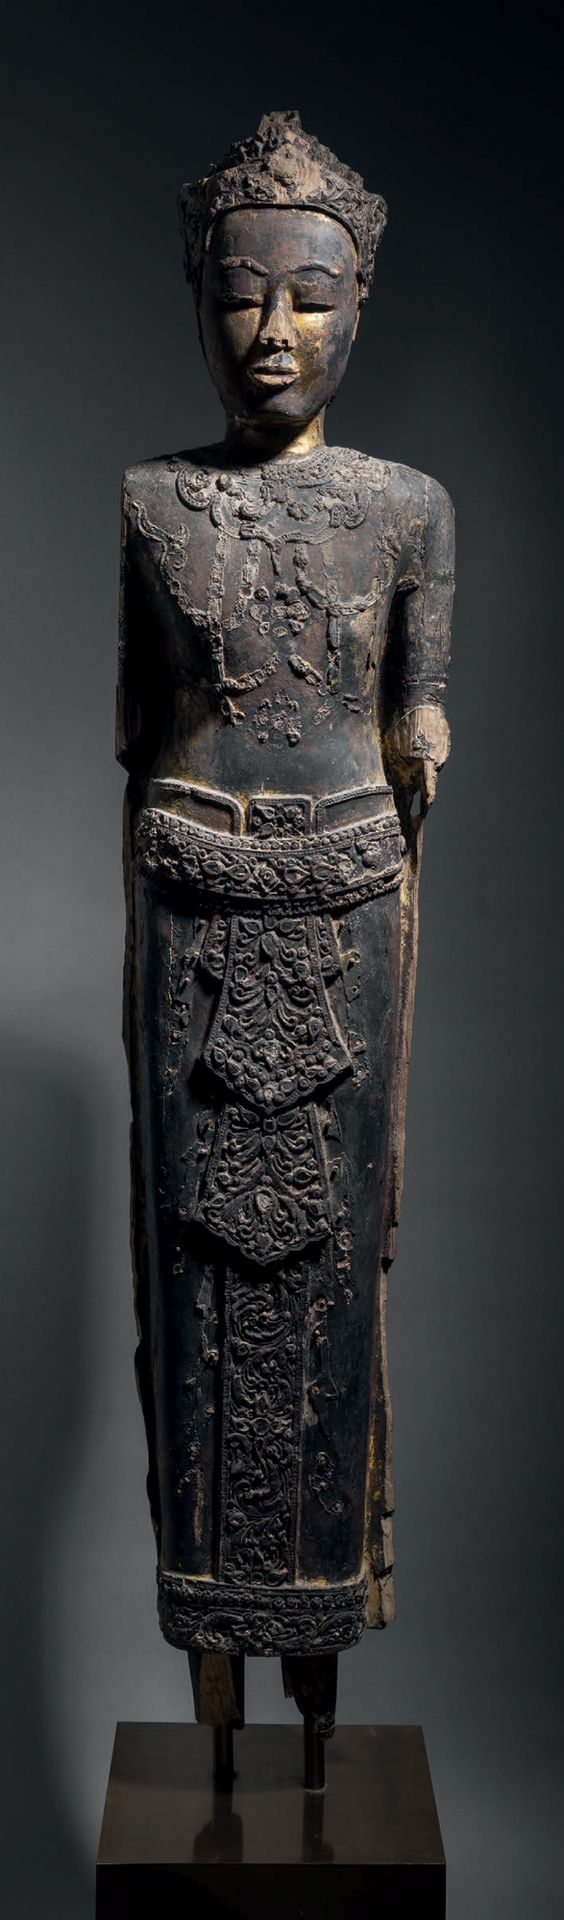 Null 站立装饰的佛像，柬埔寨，17世纪，高127厘米。漆面和镀金的木材，镶嵌玻璃
佛祖的面容很安详，杏仁形的眼睛半闭着，嘴唇相连，眉毛上扬。佛袍的装饰是用模&hellip;